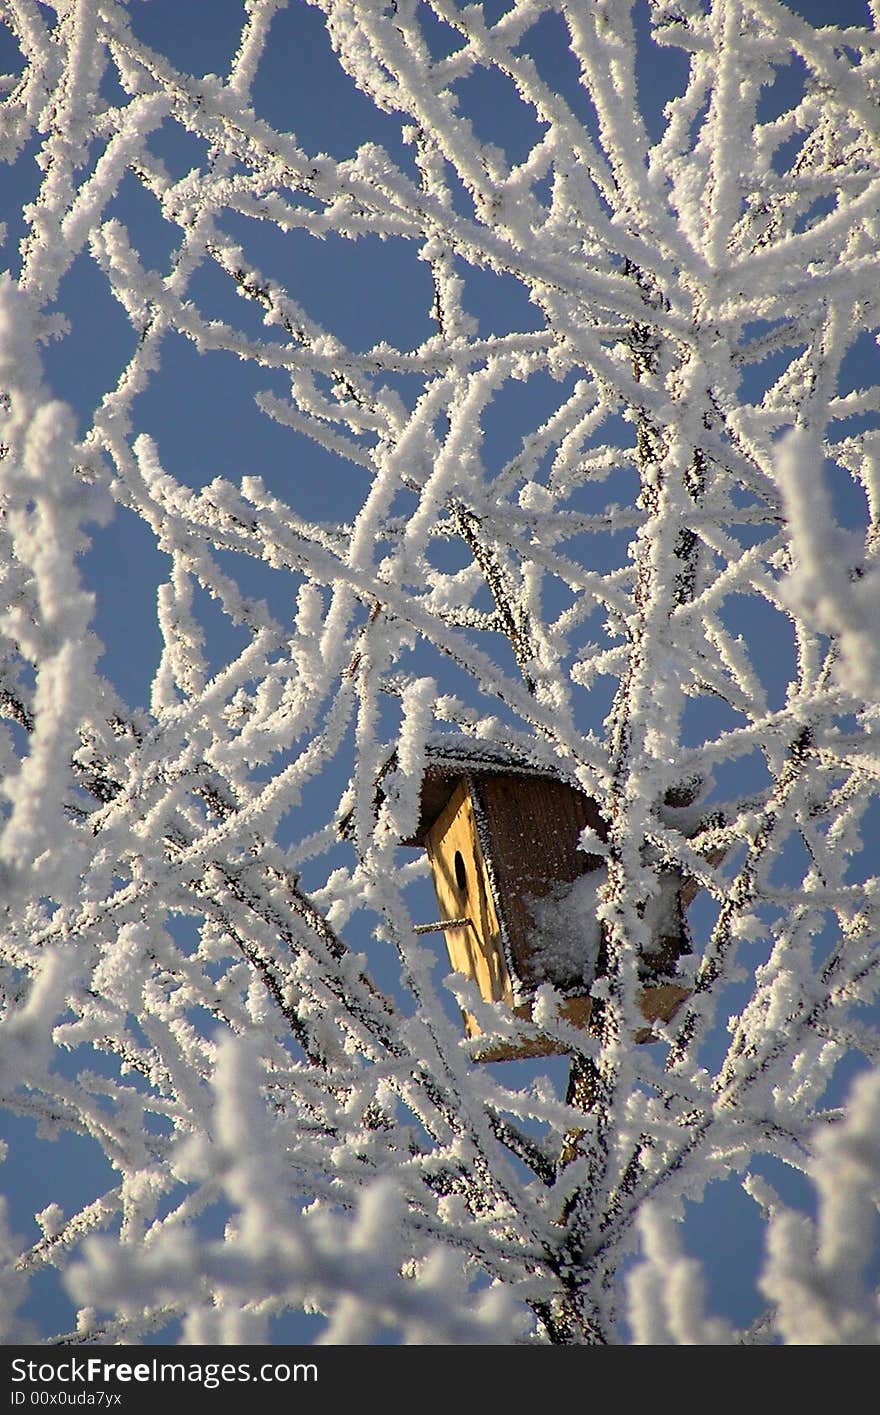 Snowy tree top and bird box. Snowy tree top and bird box